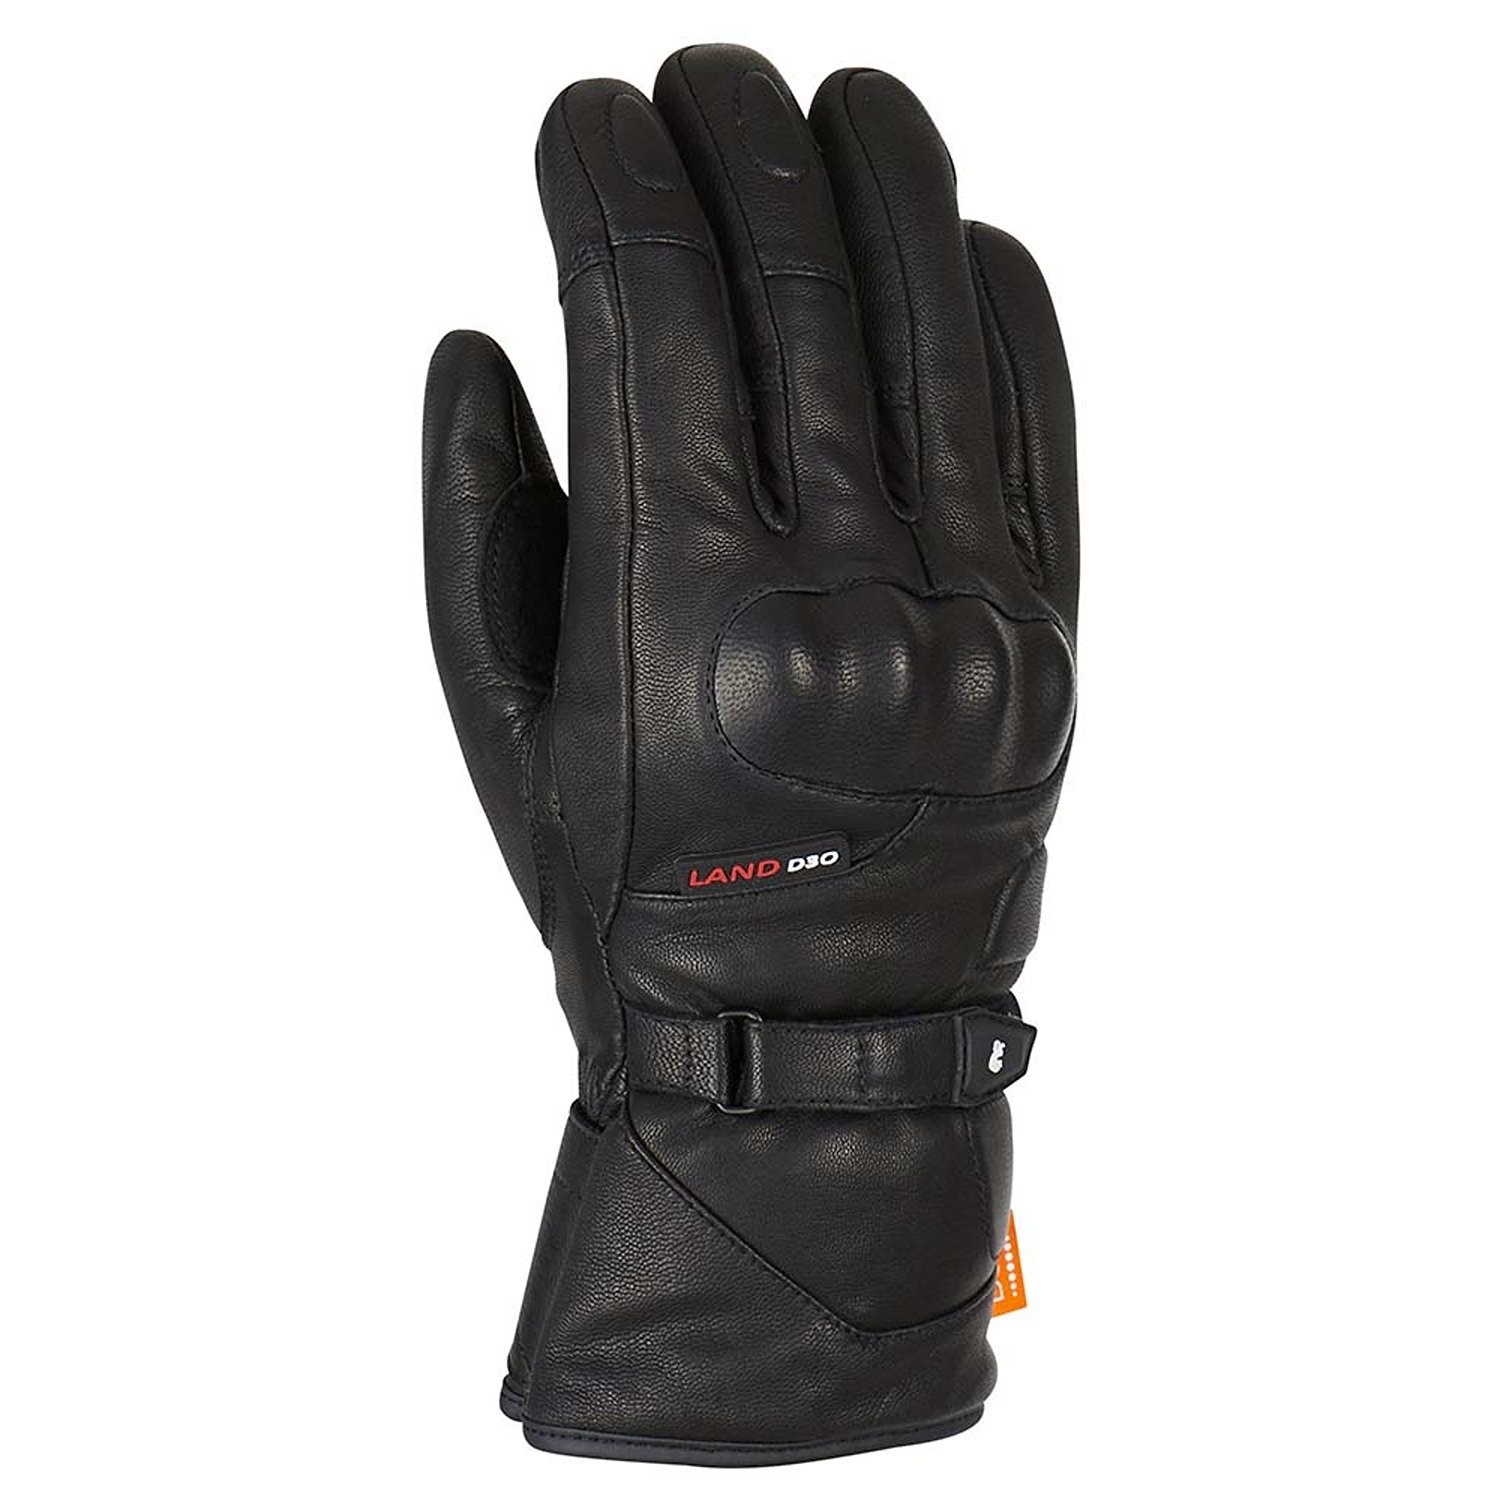 Image of Furygan Land DK D30 Gloves Black Size M ID 3435980358556